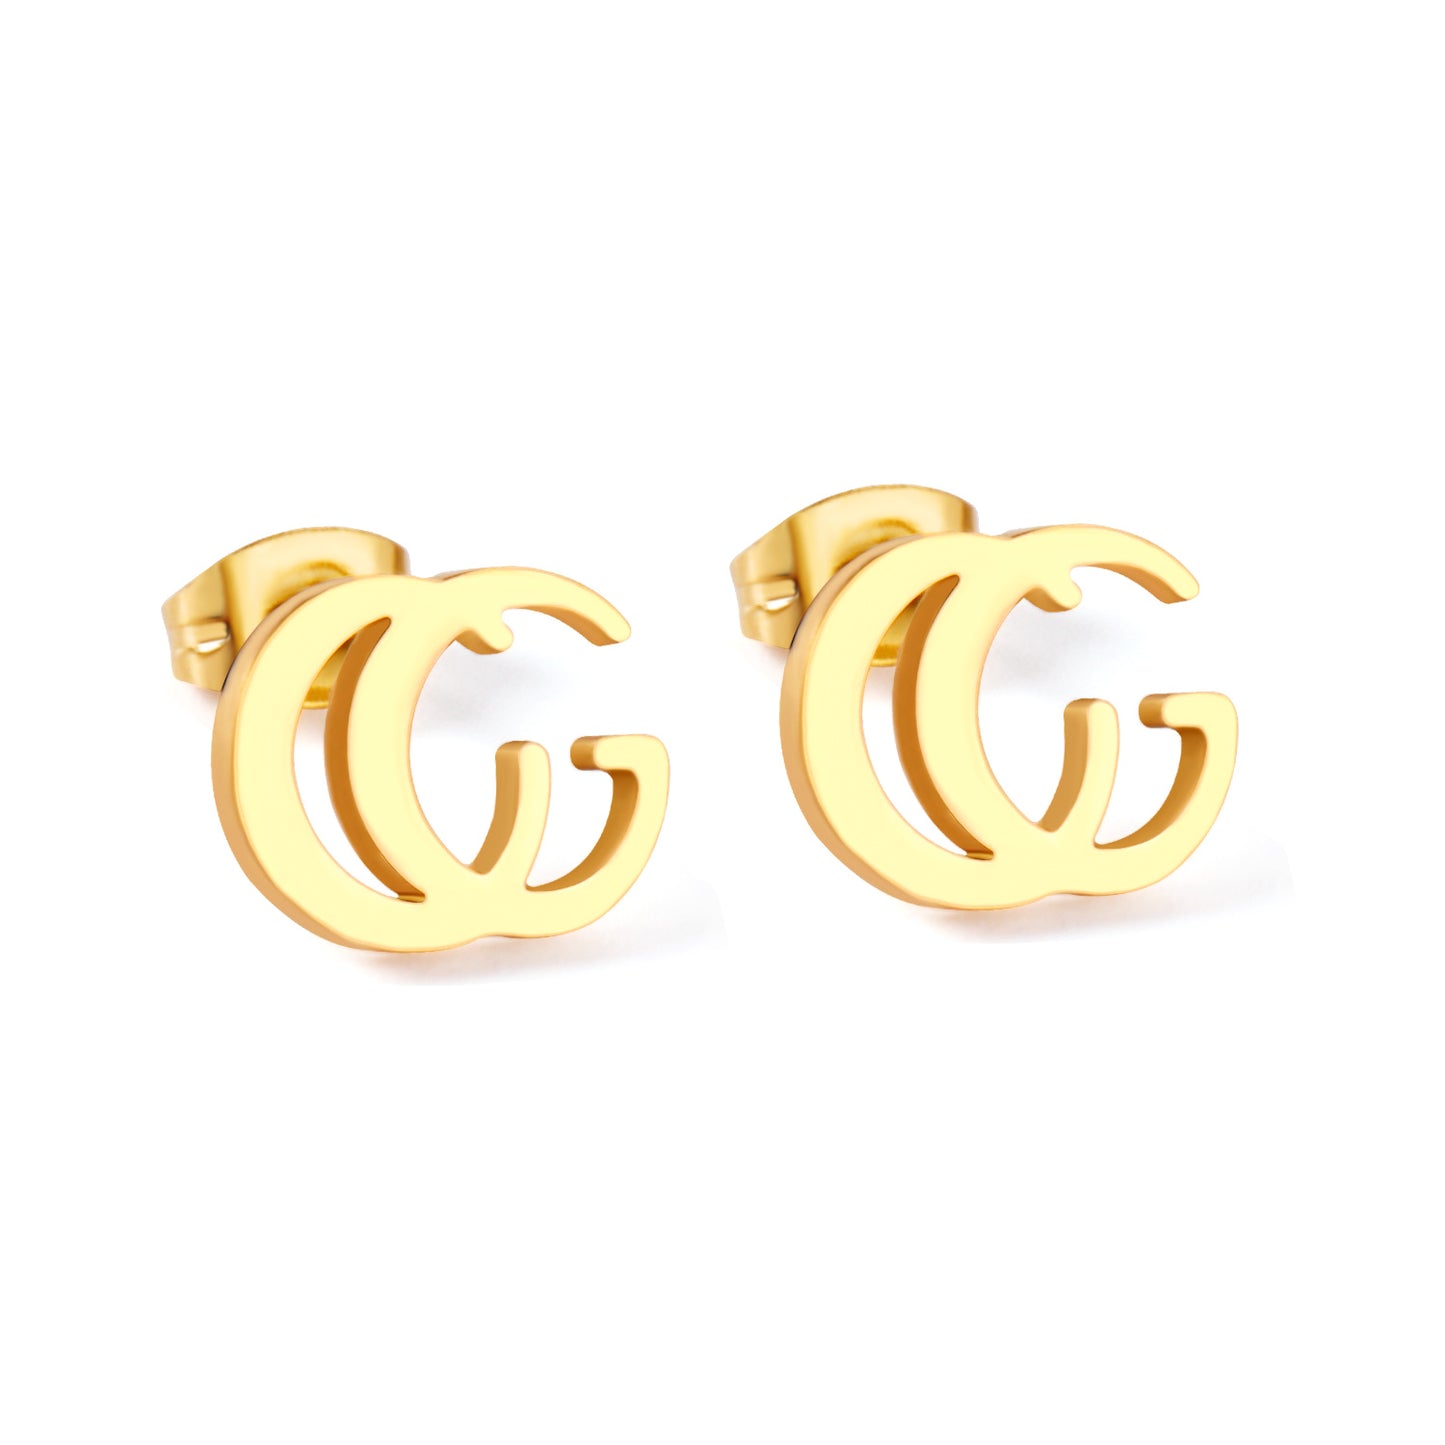 Gg 18k gold plated stud earring